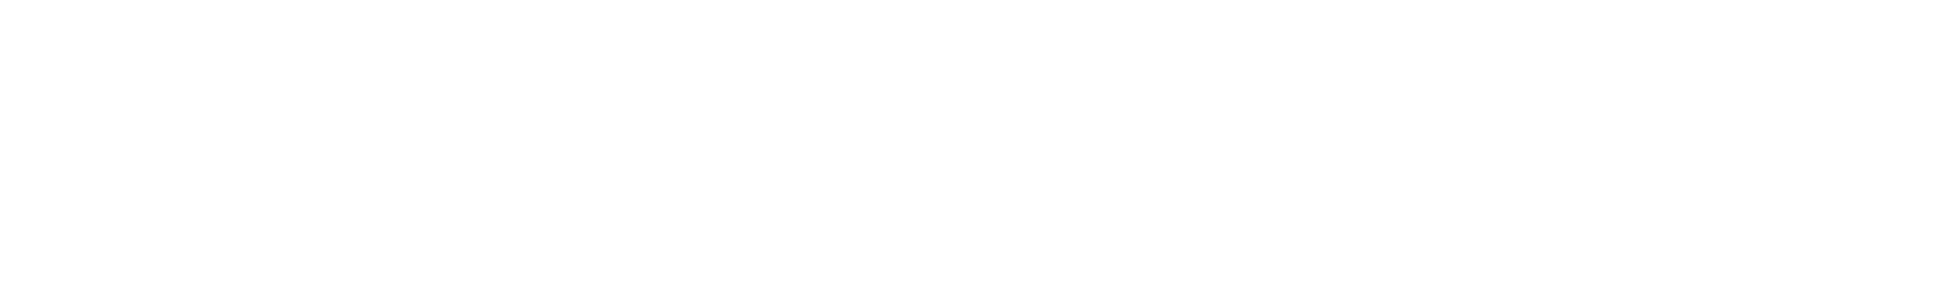 wes-lmic-logo